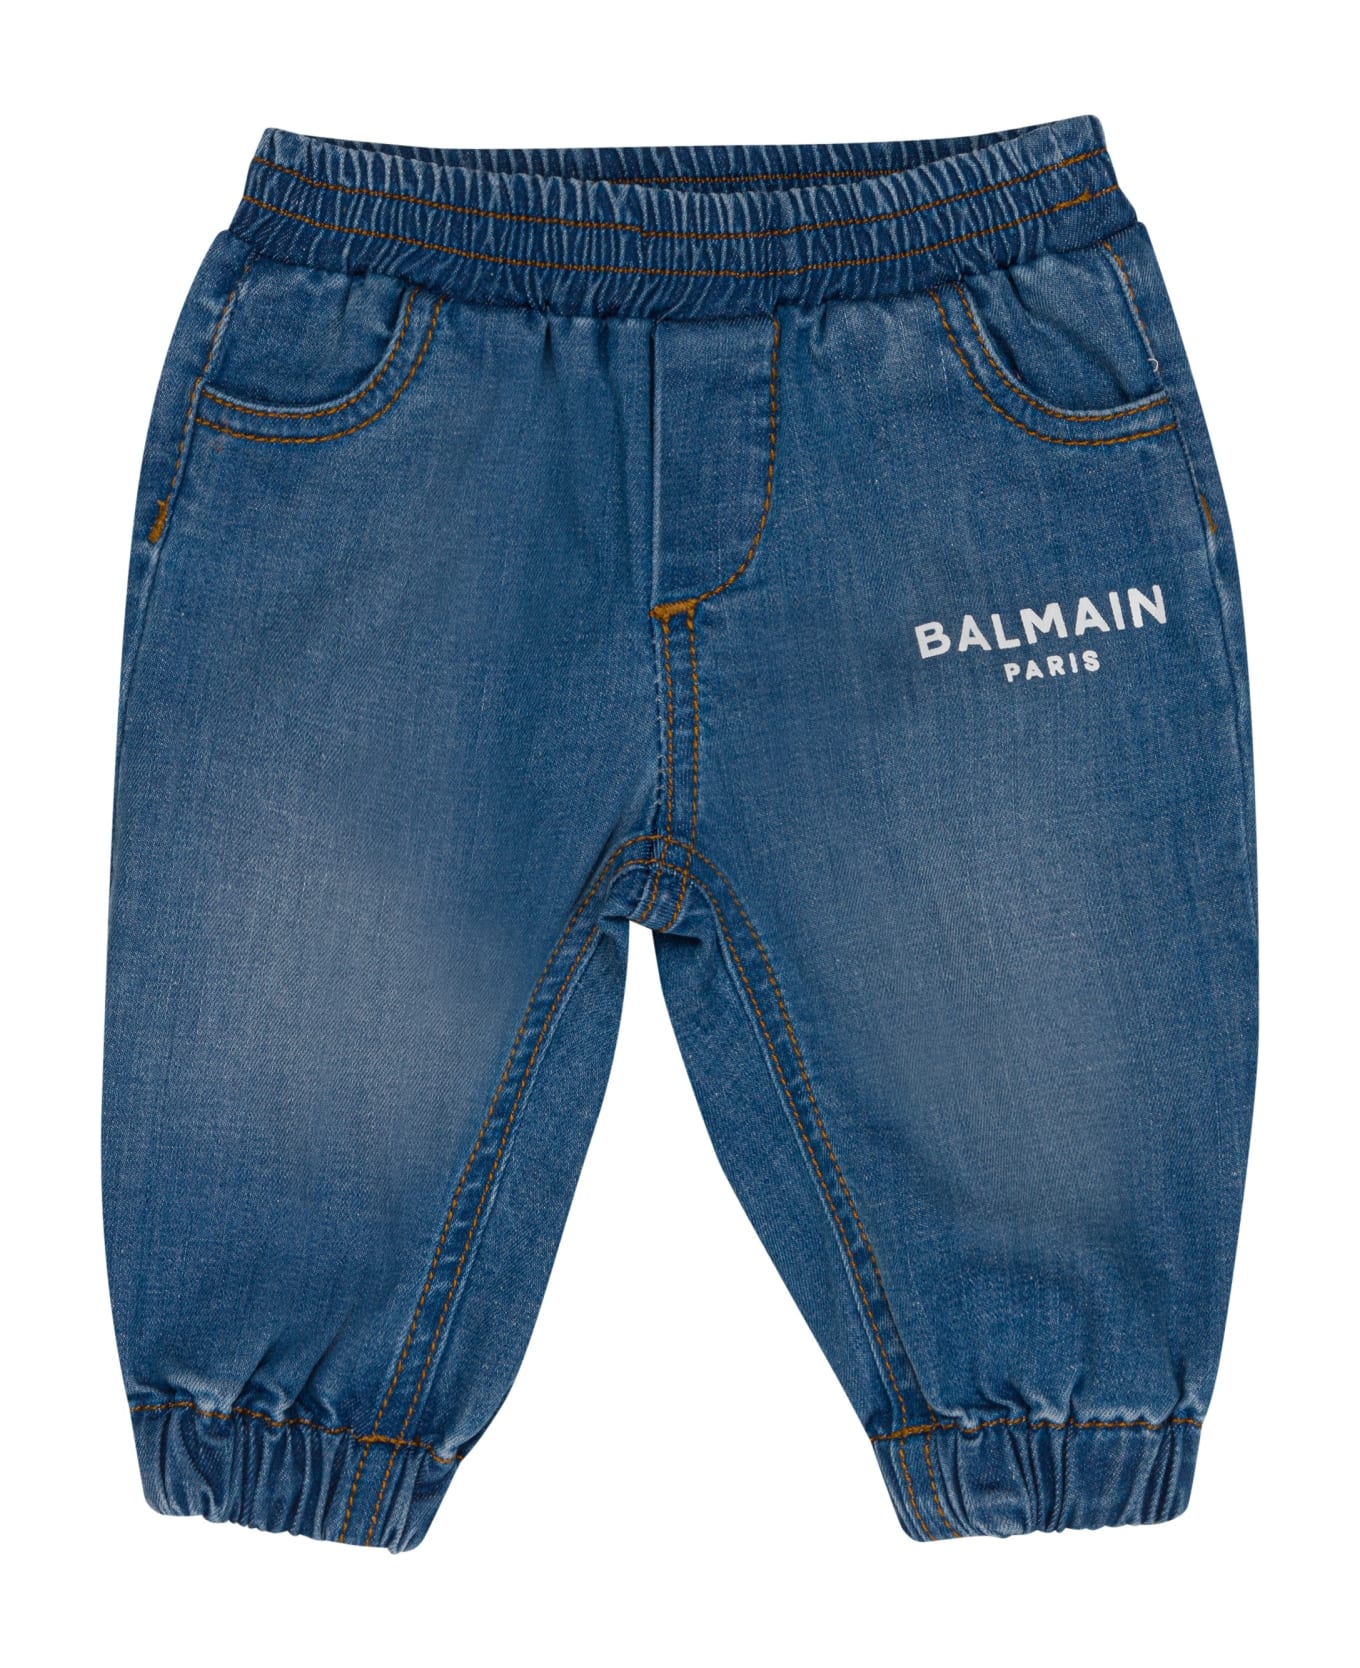 Balmain Jeans Neonato - Blue ボトムス